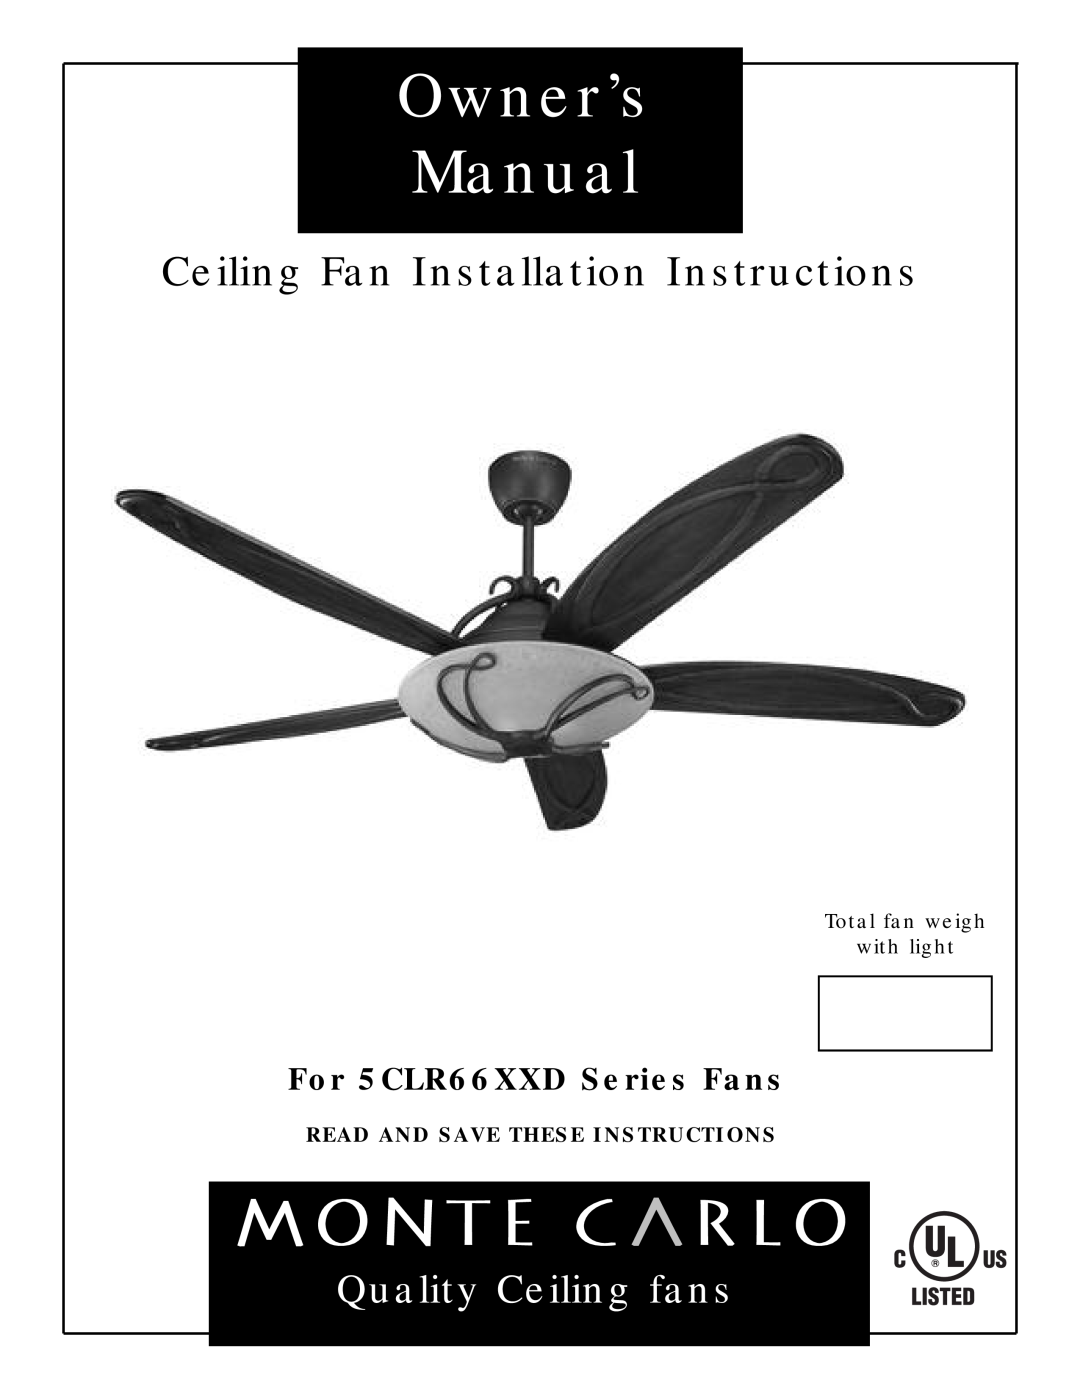 Monte Carlo Fan Company owner manual For 5CLR66XXD Series Fans, Ceiling Fan Installation Instructions 